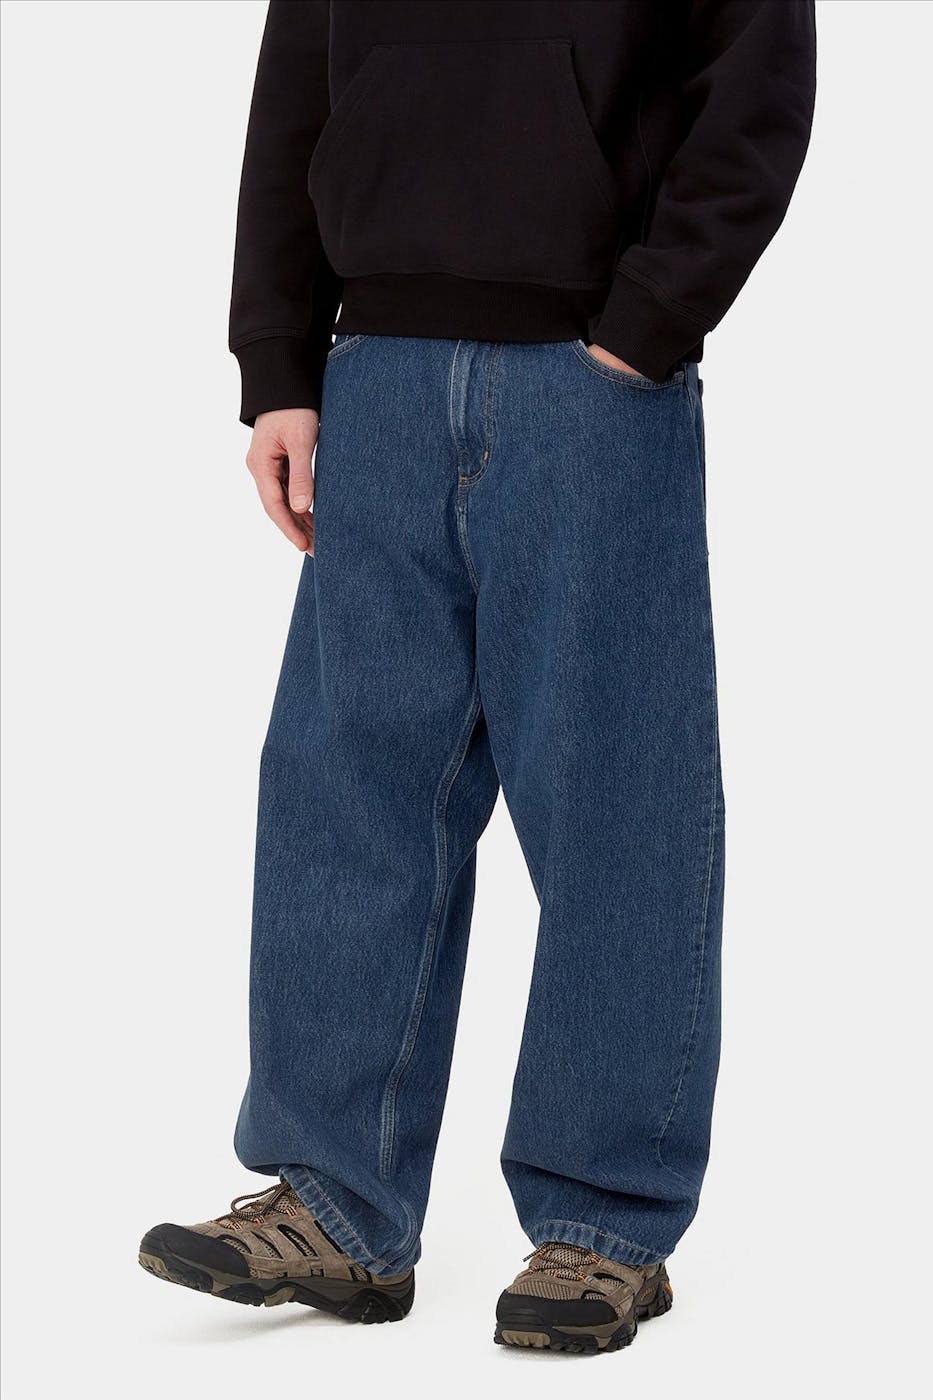 Carhartt WIP - Blauwe Brandon jeans